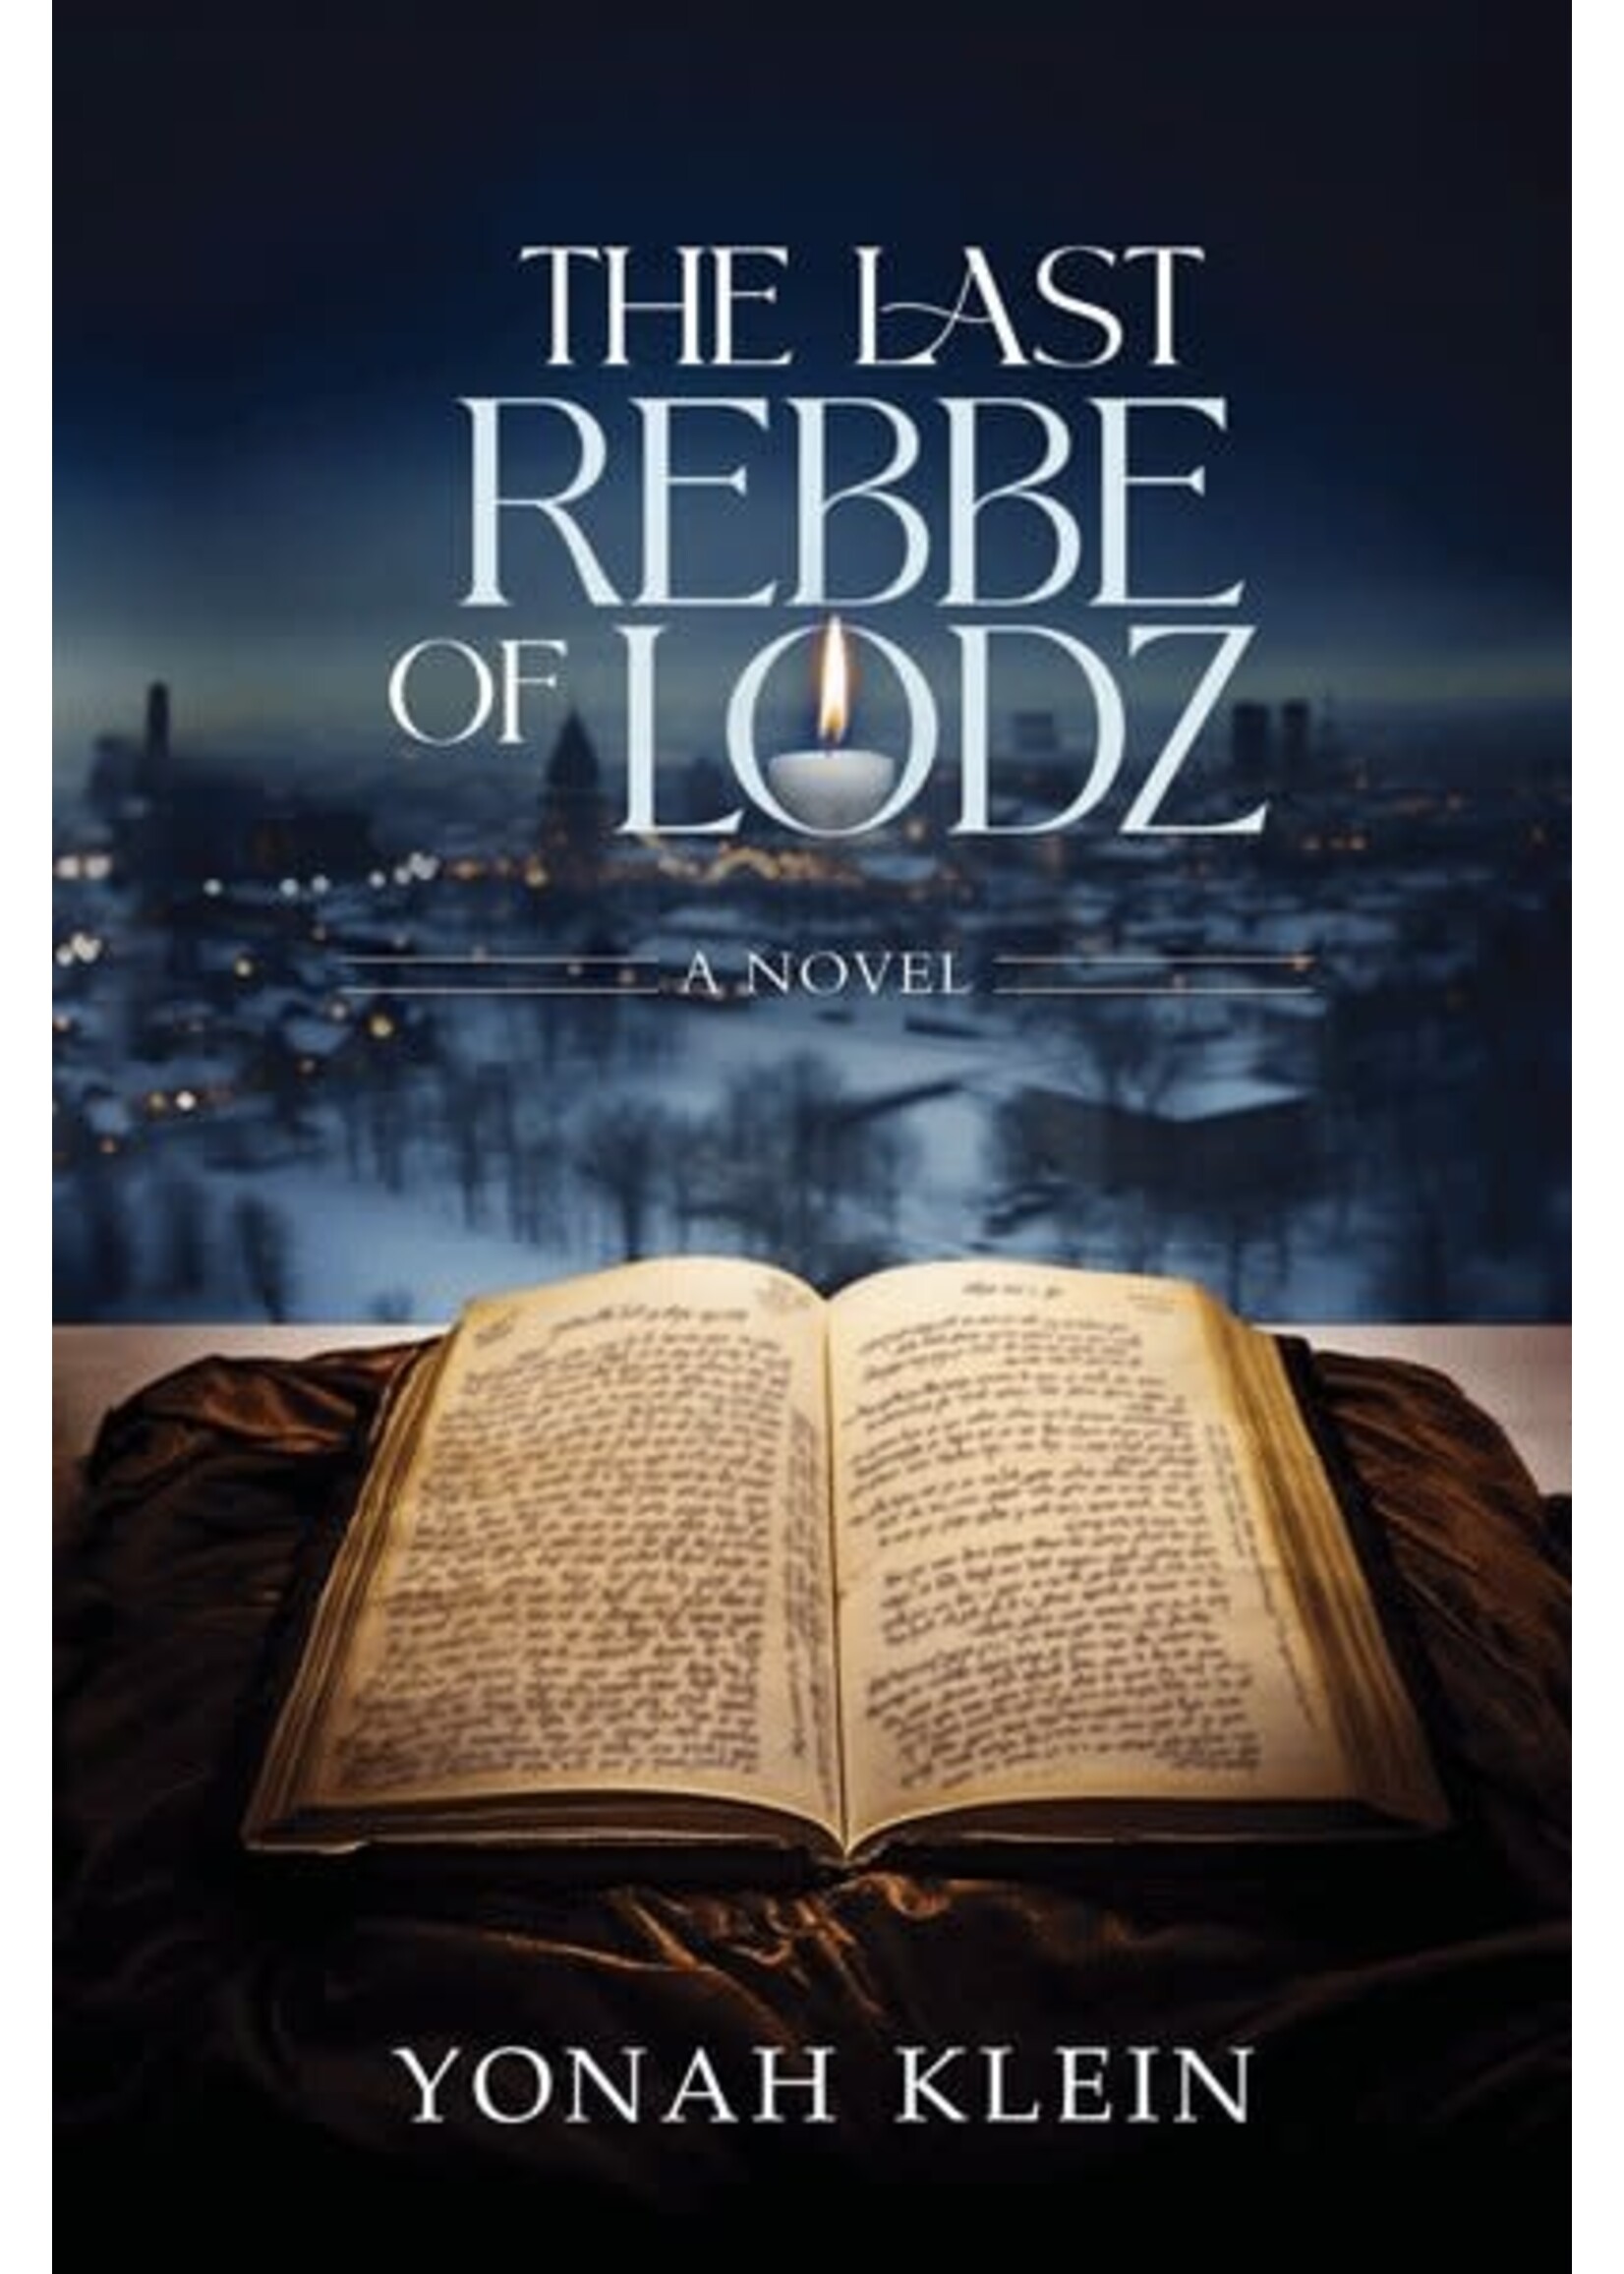 THE REBBE OF LODZ - A NOVEL